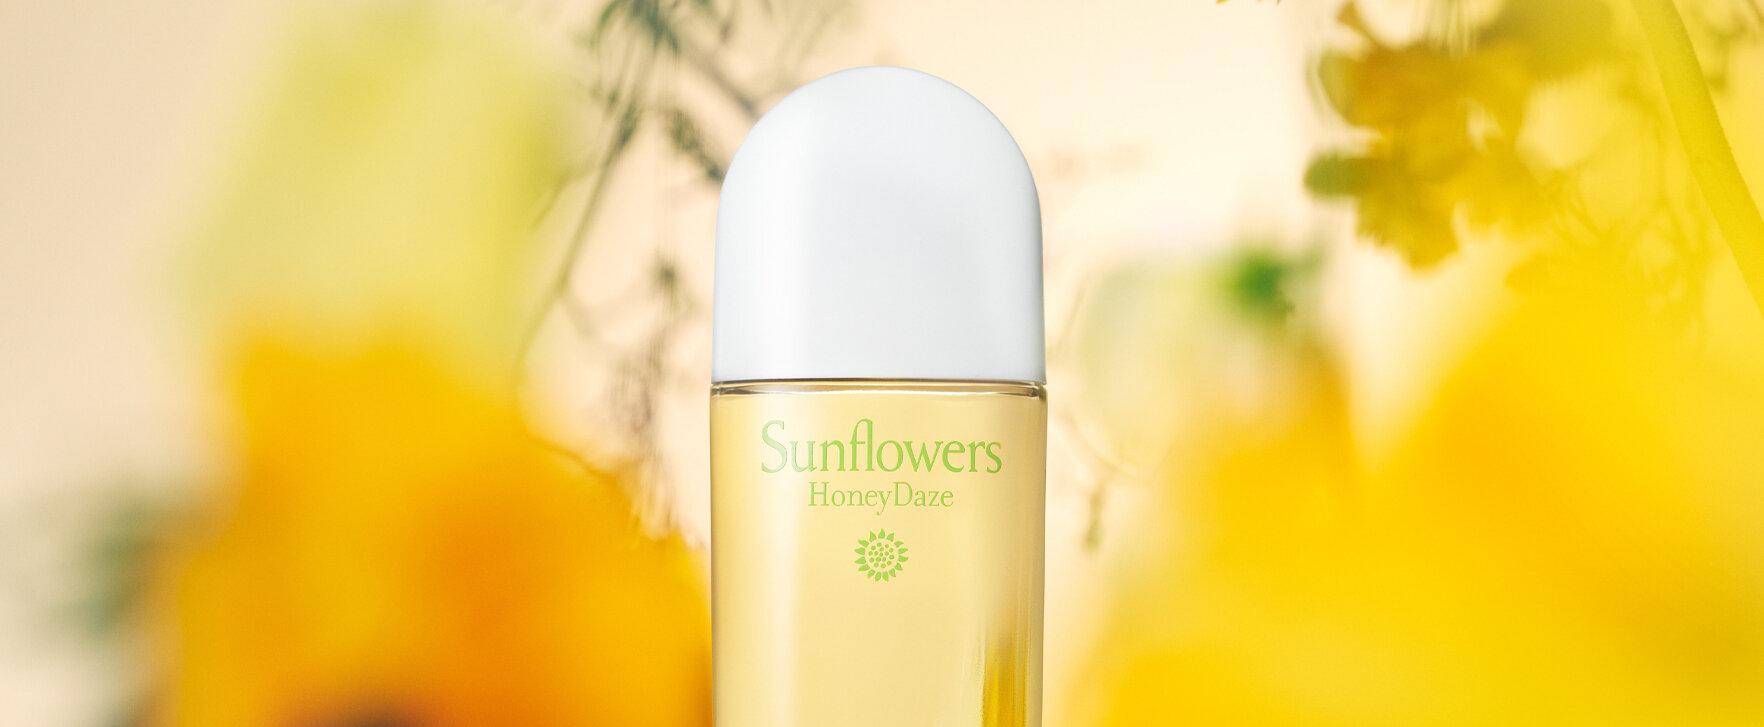 A Touch of Summer: The New Feminine Fragrance “Sunflowers Honeydaze” by Elizabeth Arden